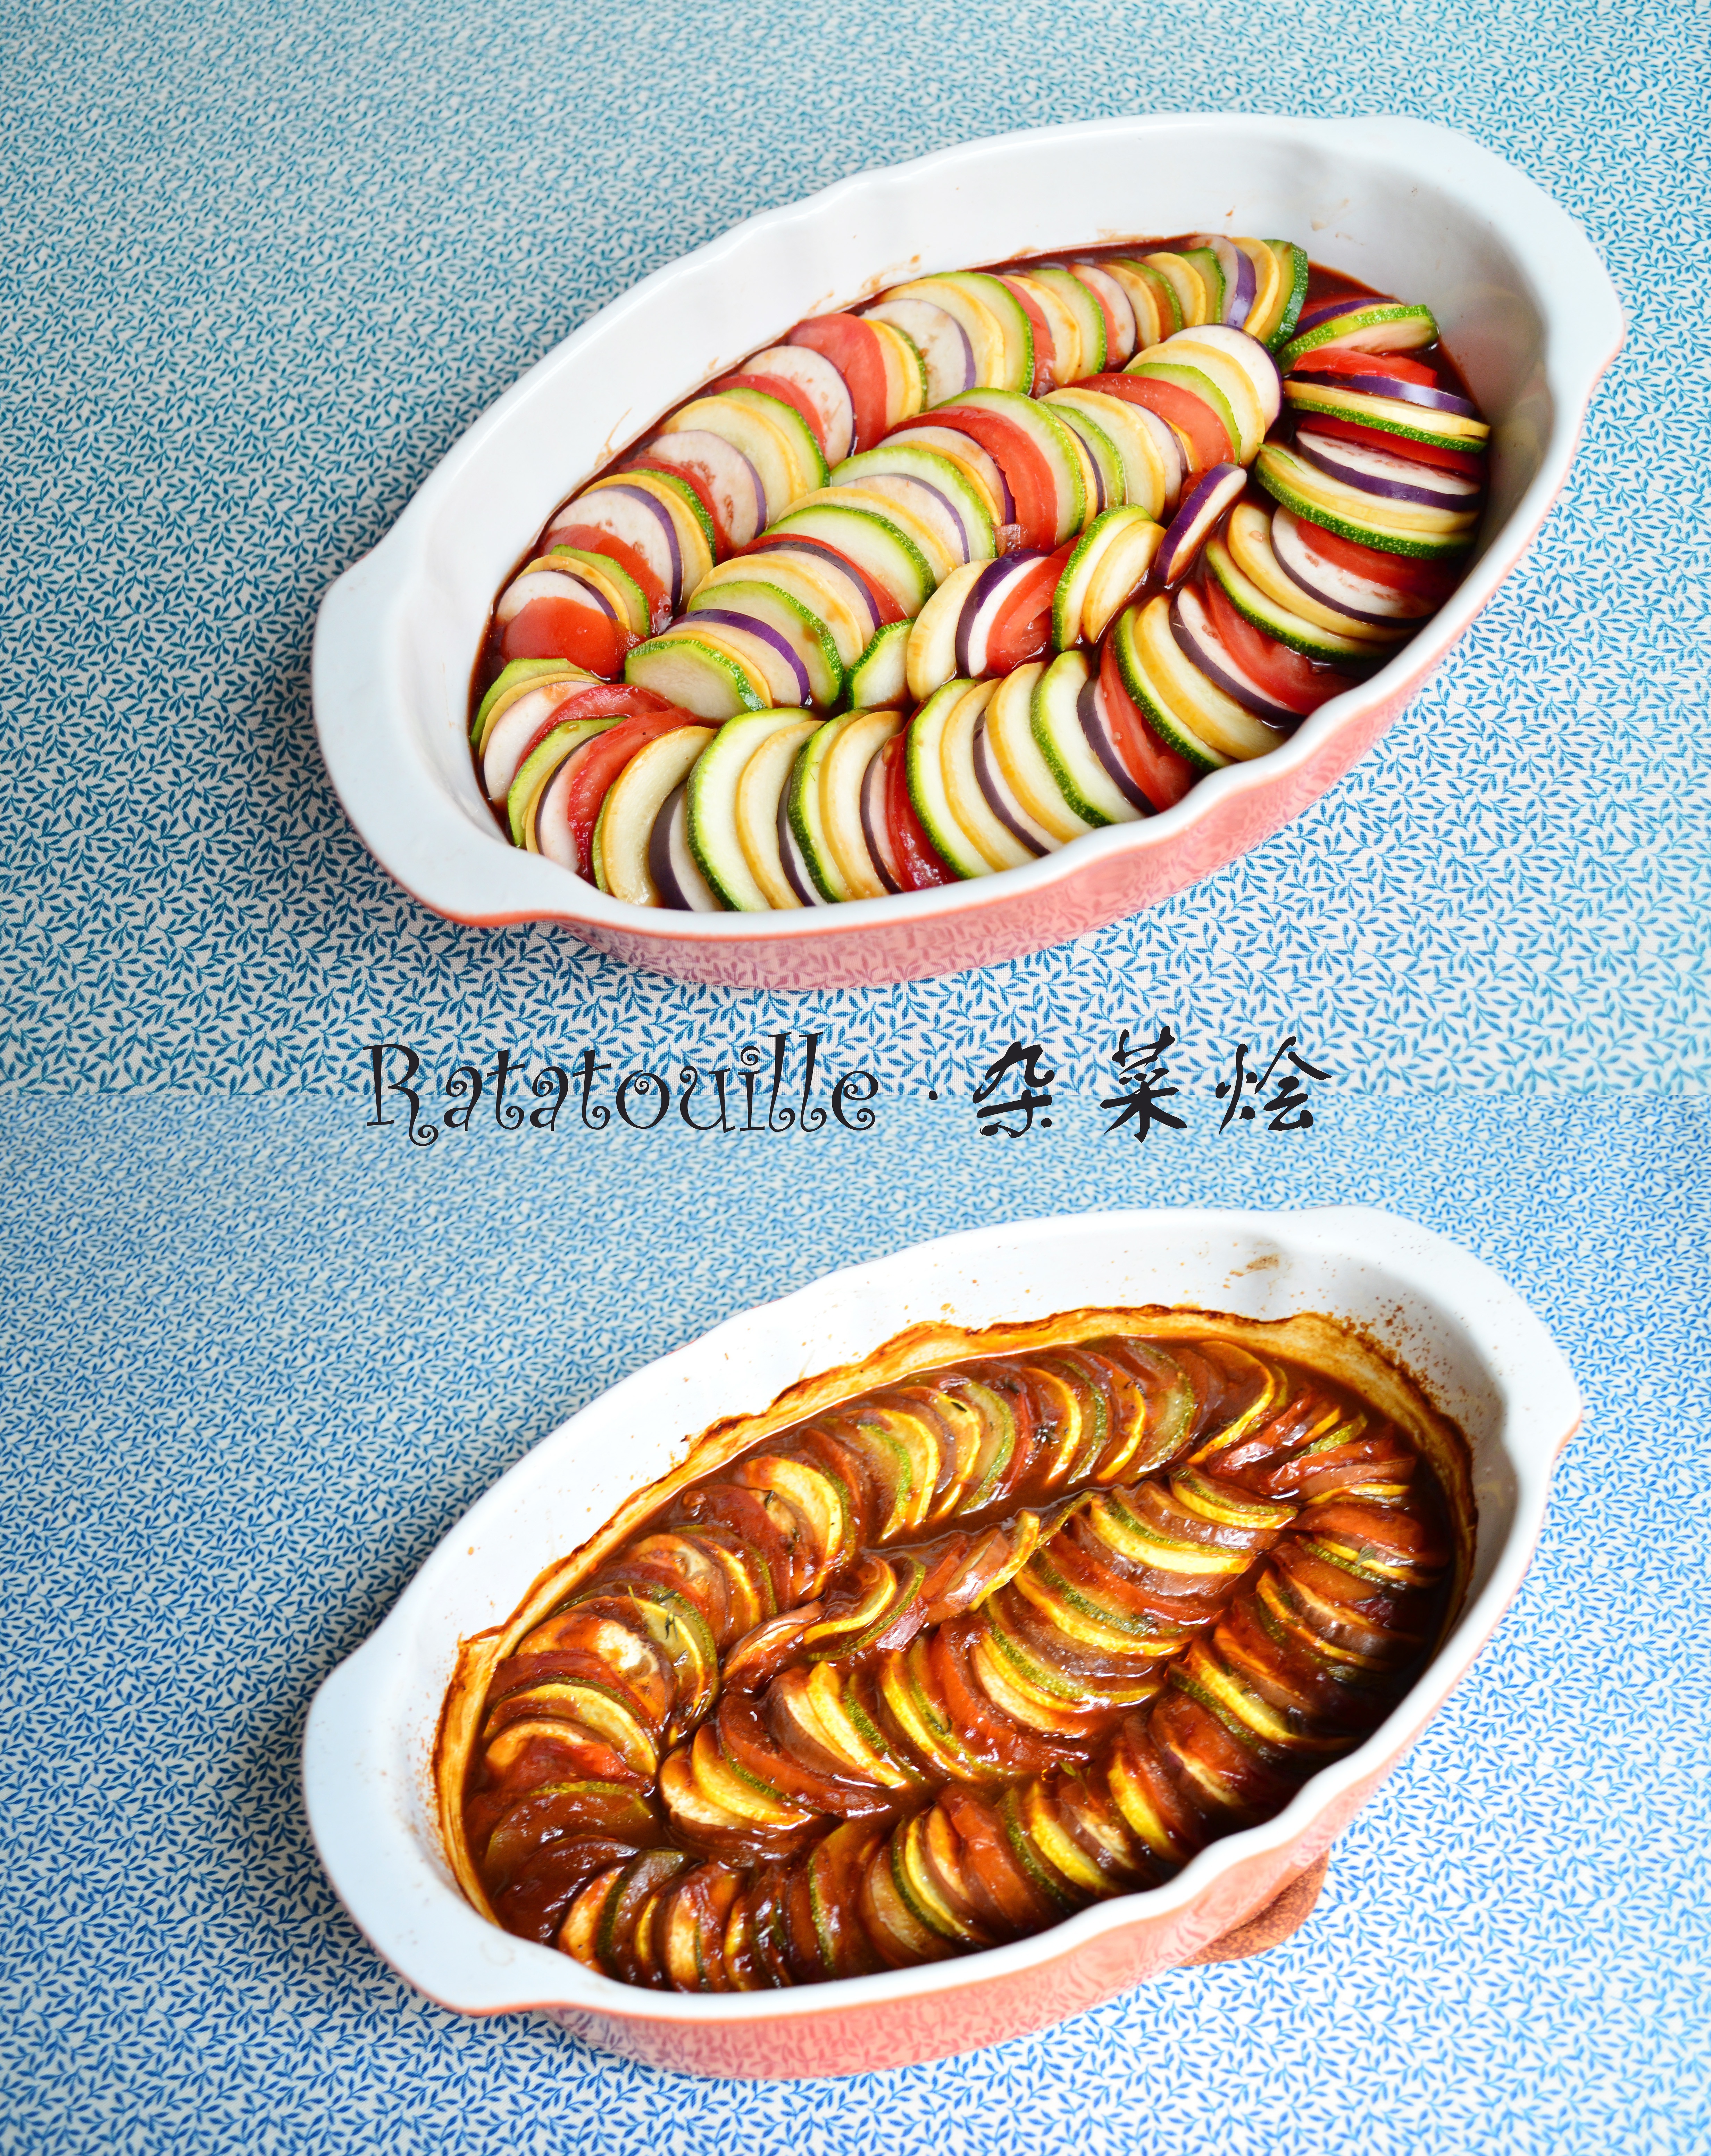 Ratatouille 杂菜烩